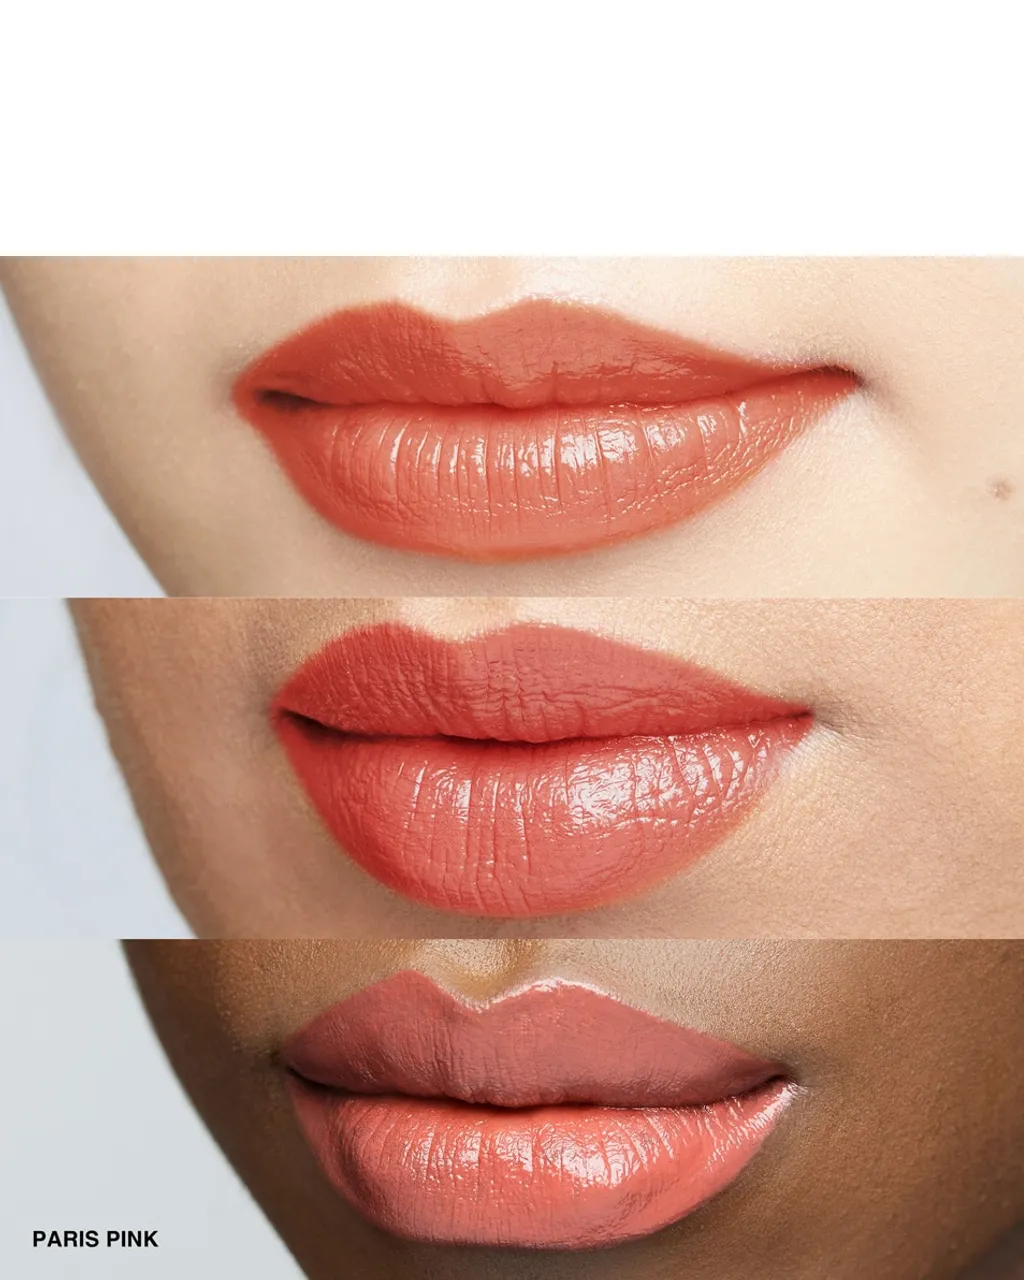 Bobbi Brown Luxe Shine Intense Lipstick HYDRATERENDE LIPPENSTIFT-